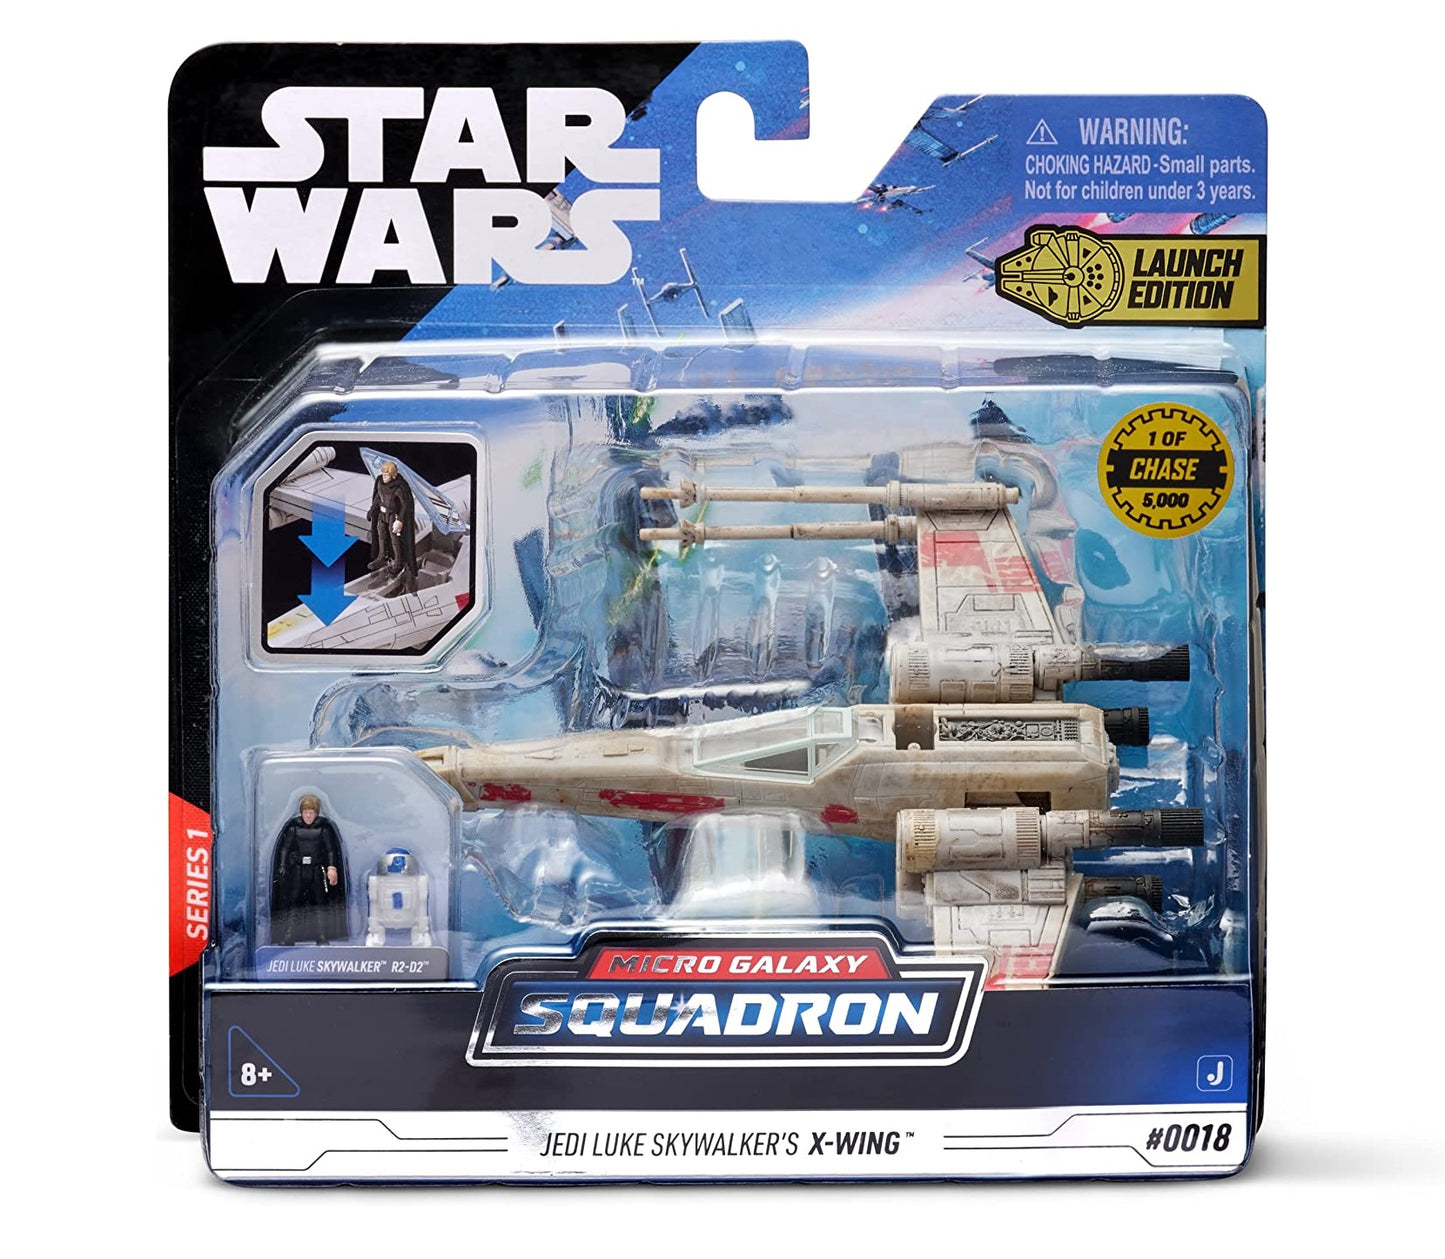 Star Wars Micro Galaxy Squadron Luke Skywalker's X-Wing #18 - Chase 1/5000